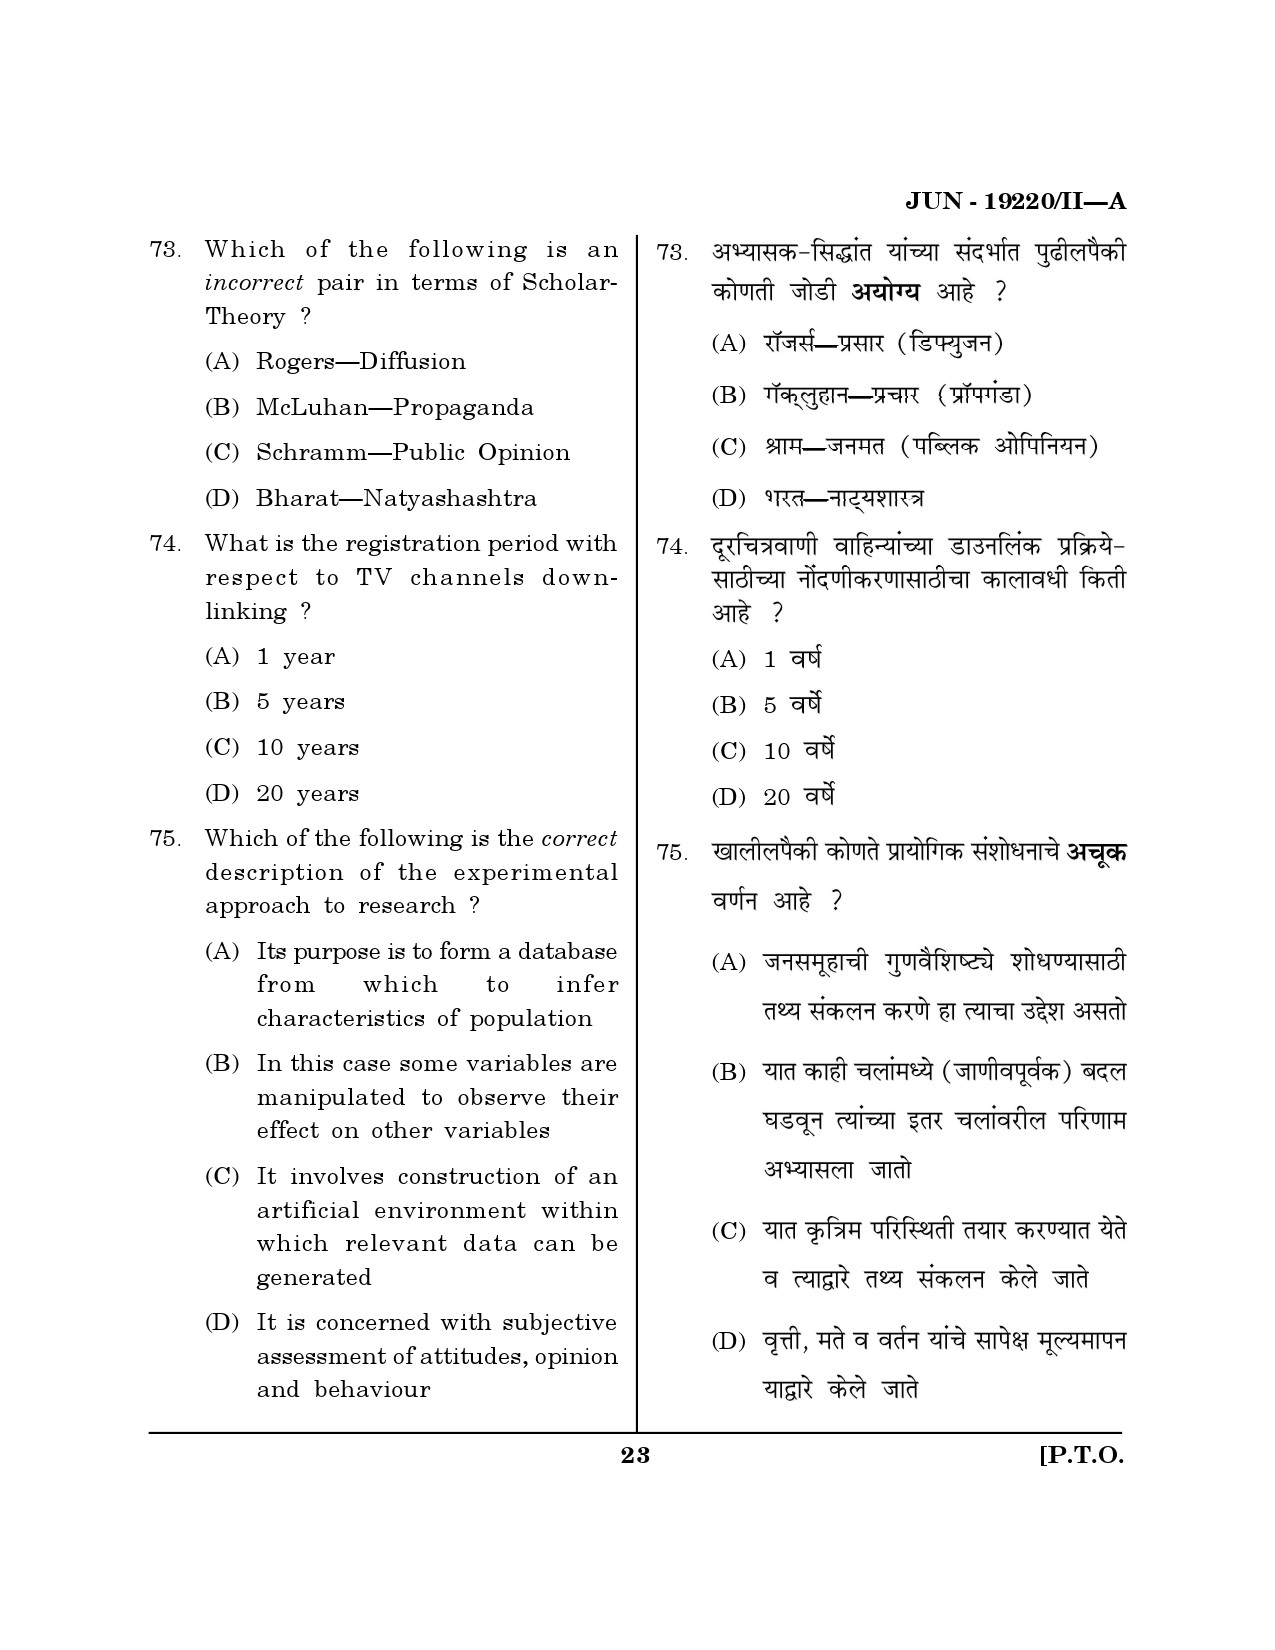 Maharashtra SET Journalism and Mass Communication Question Paper II June 2020 22